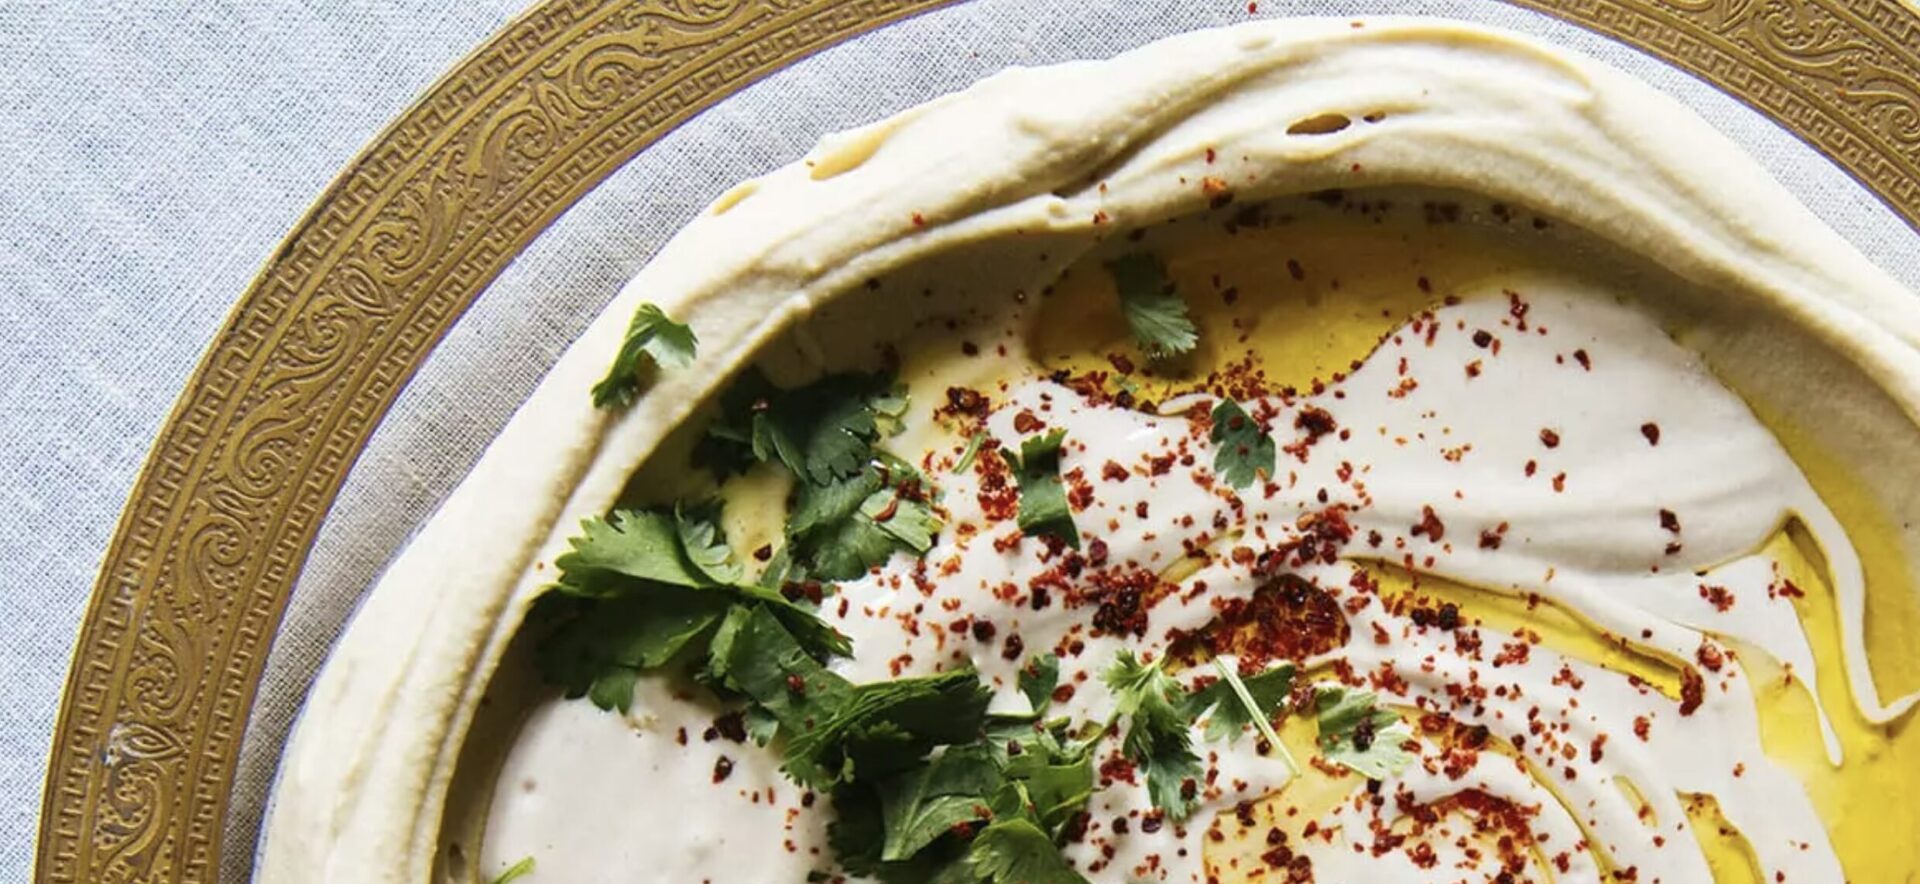 Alon Shaya's hummus recipe